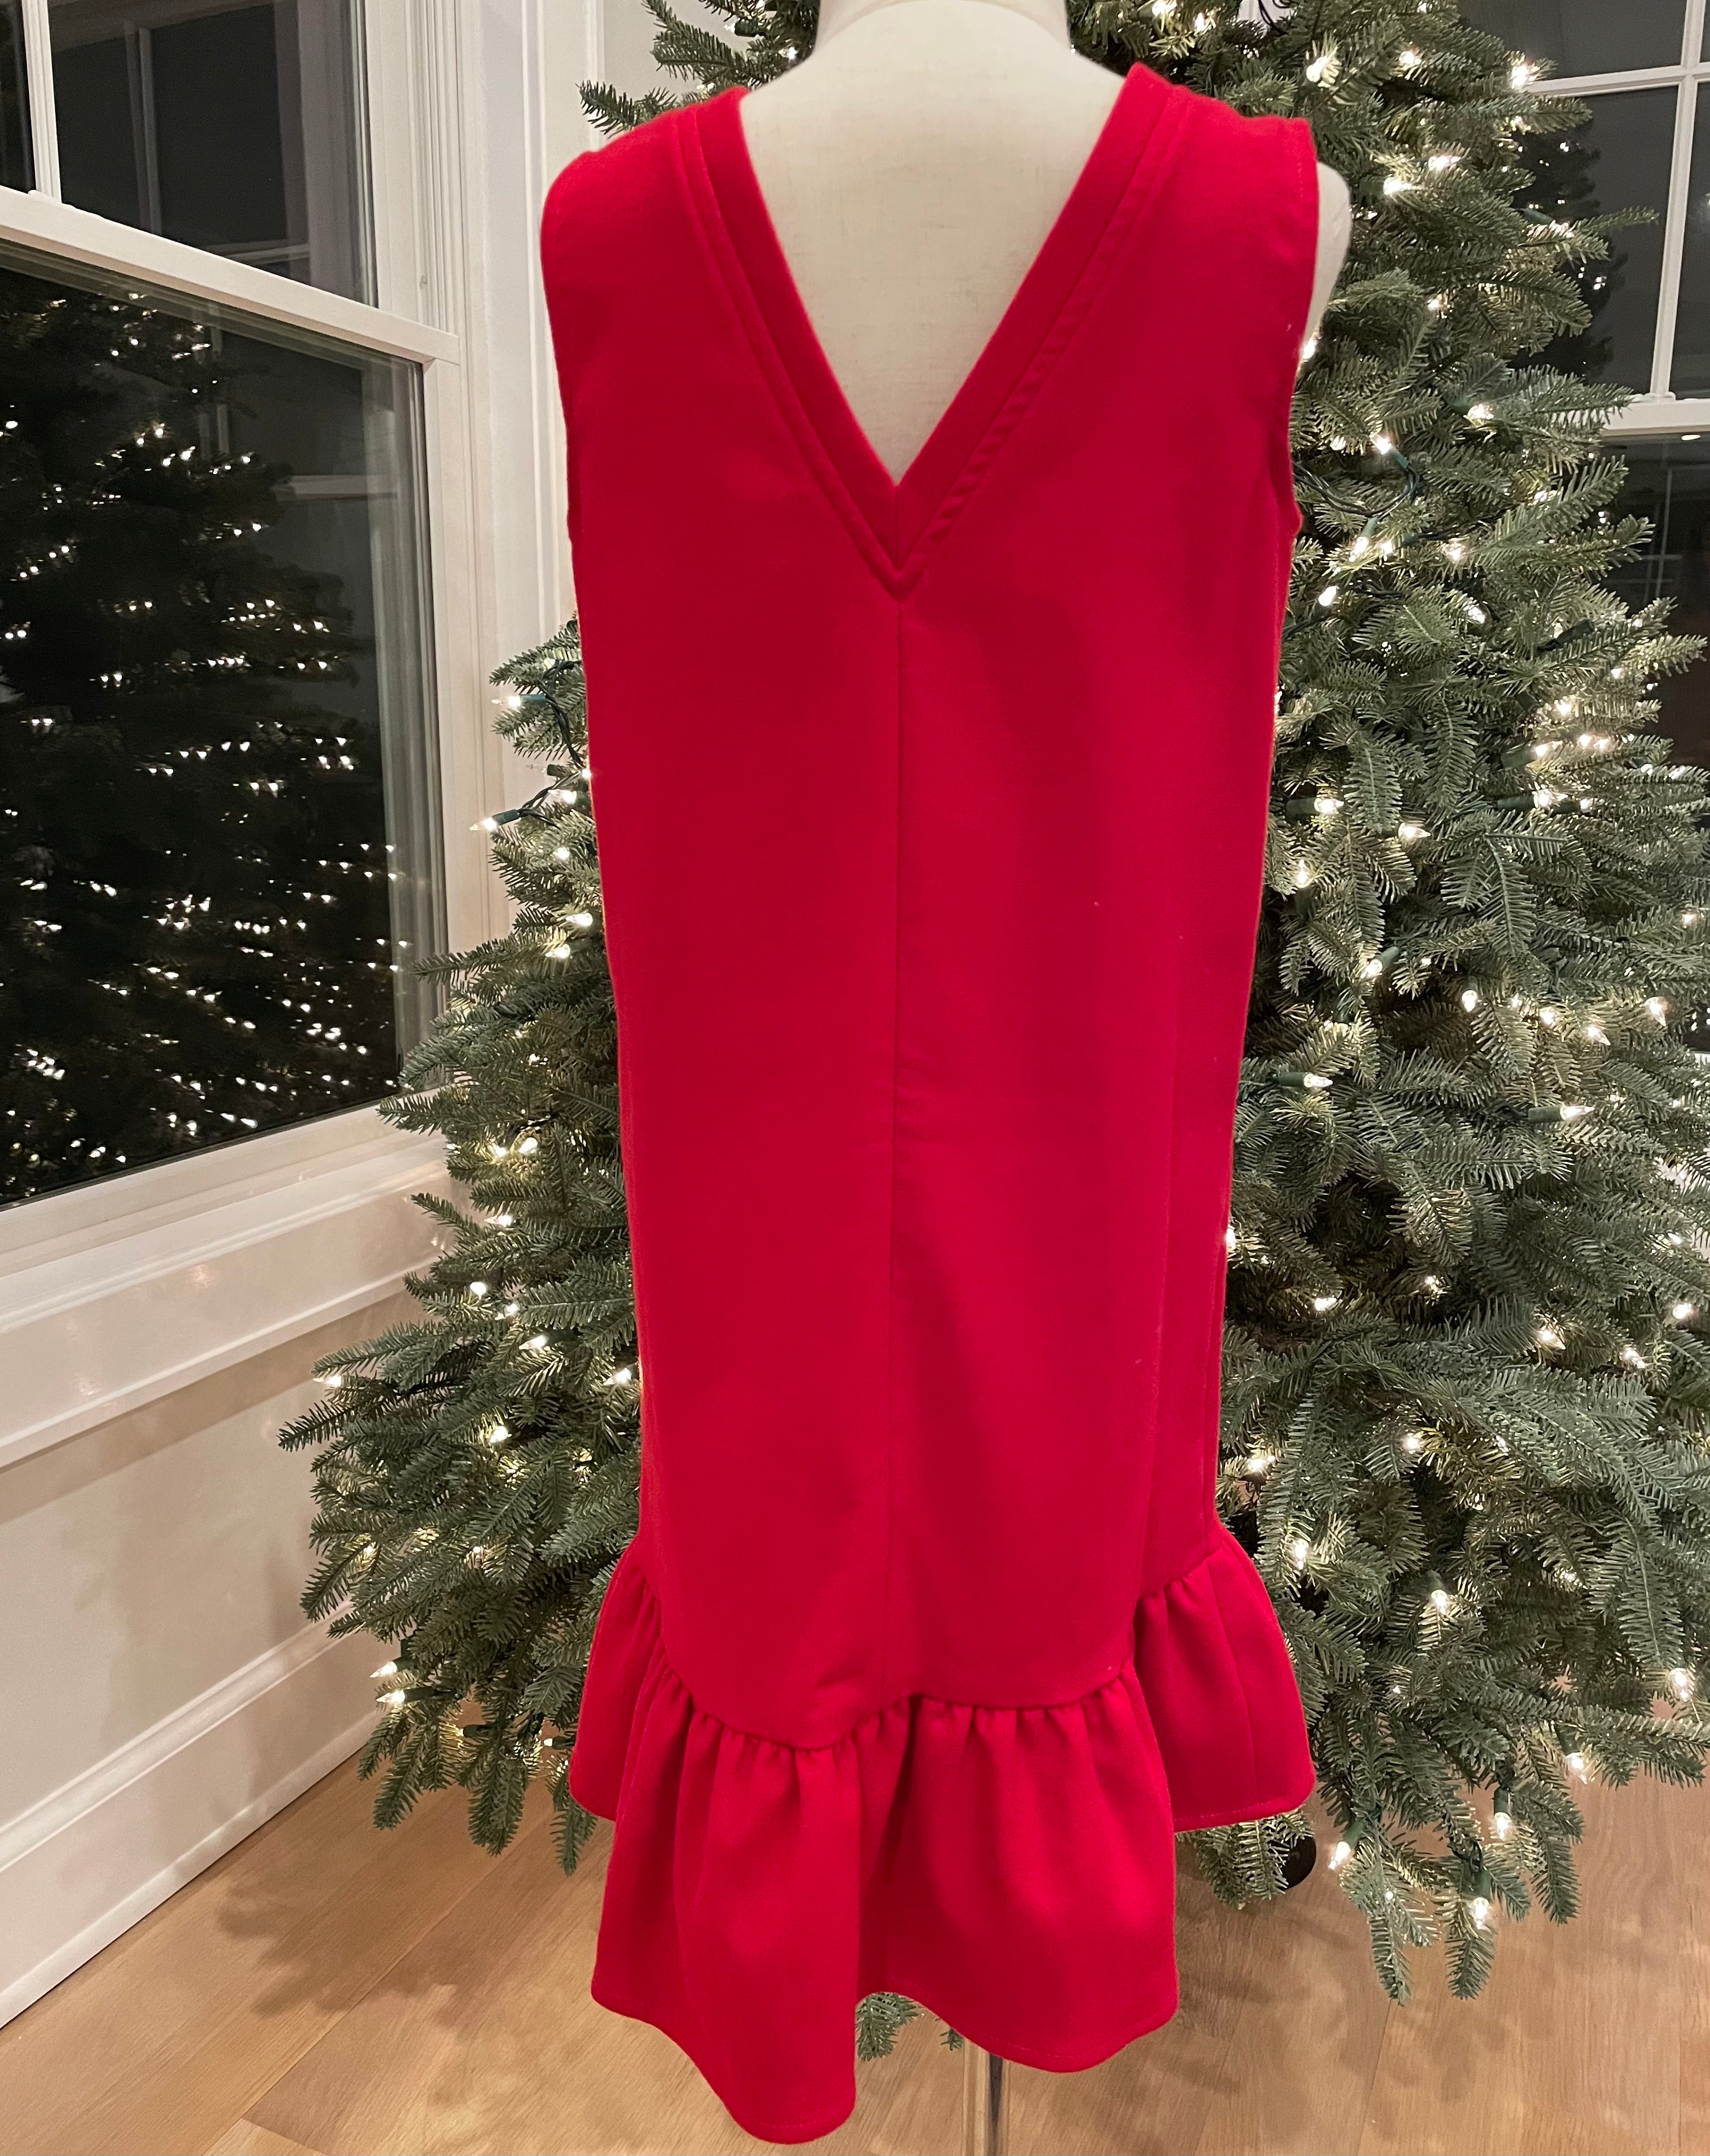 Vineyard Vines NWT Dress, Red Girls Size M (10/12)